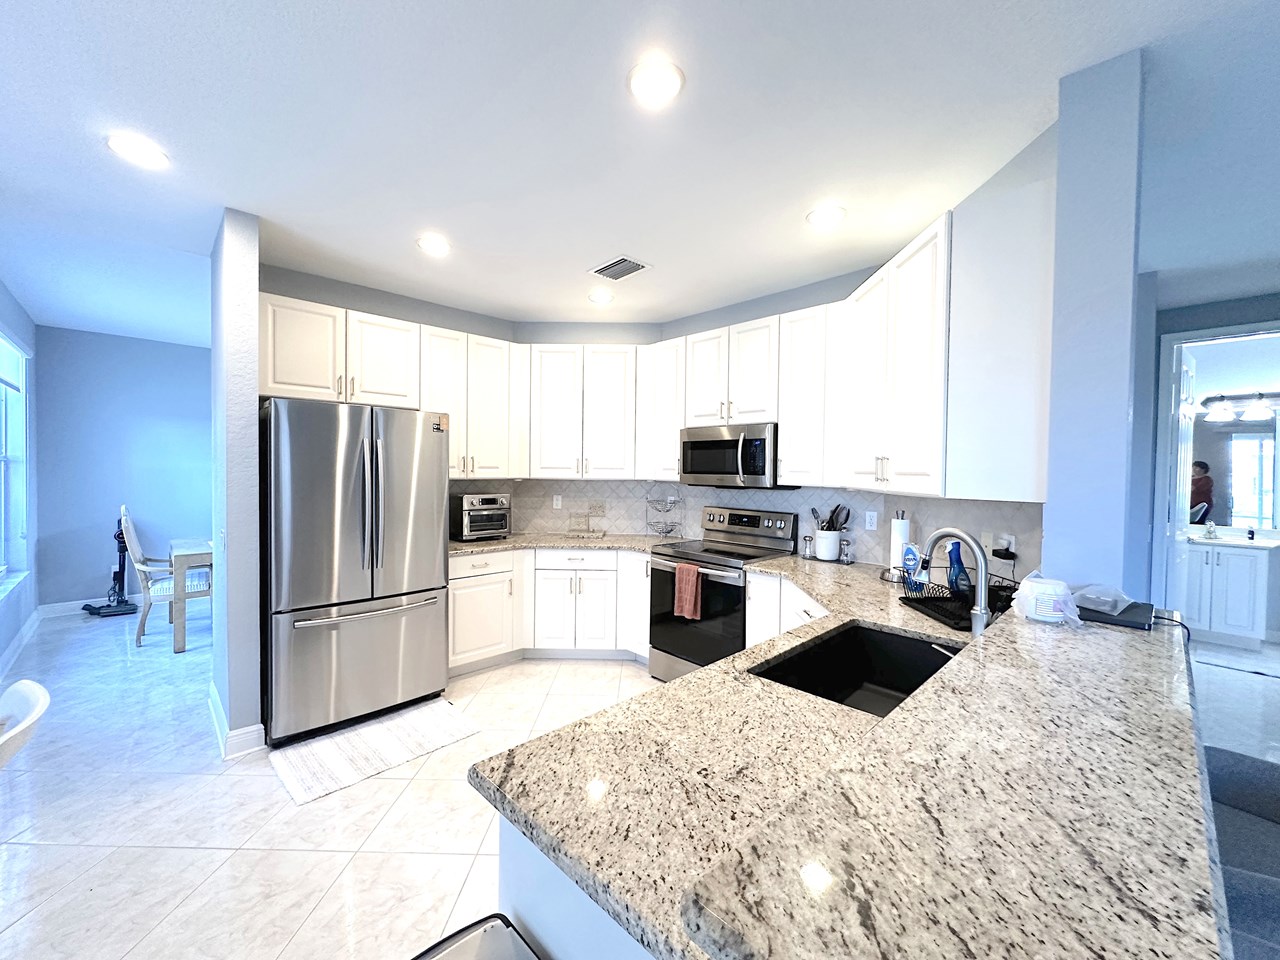 kitchen, ss appliances, granite counters